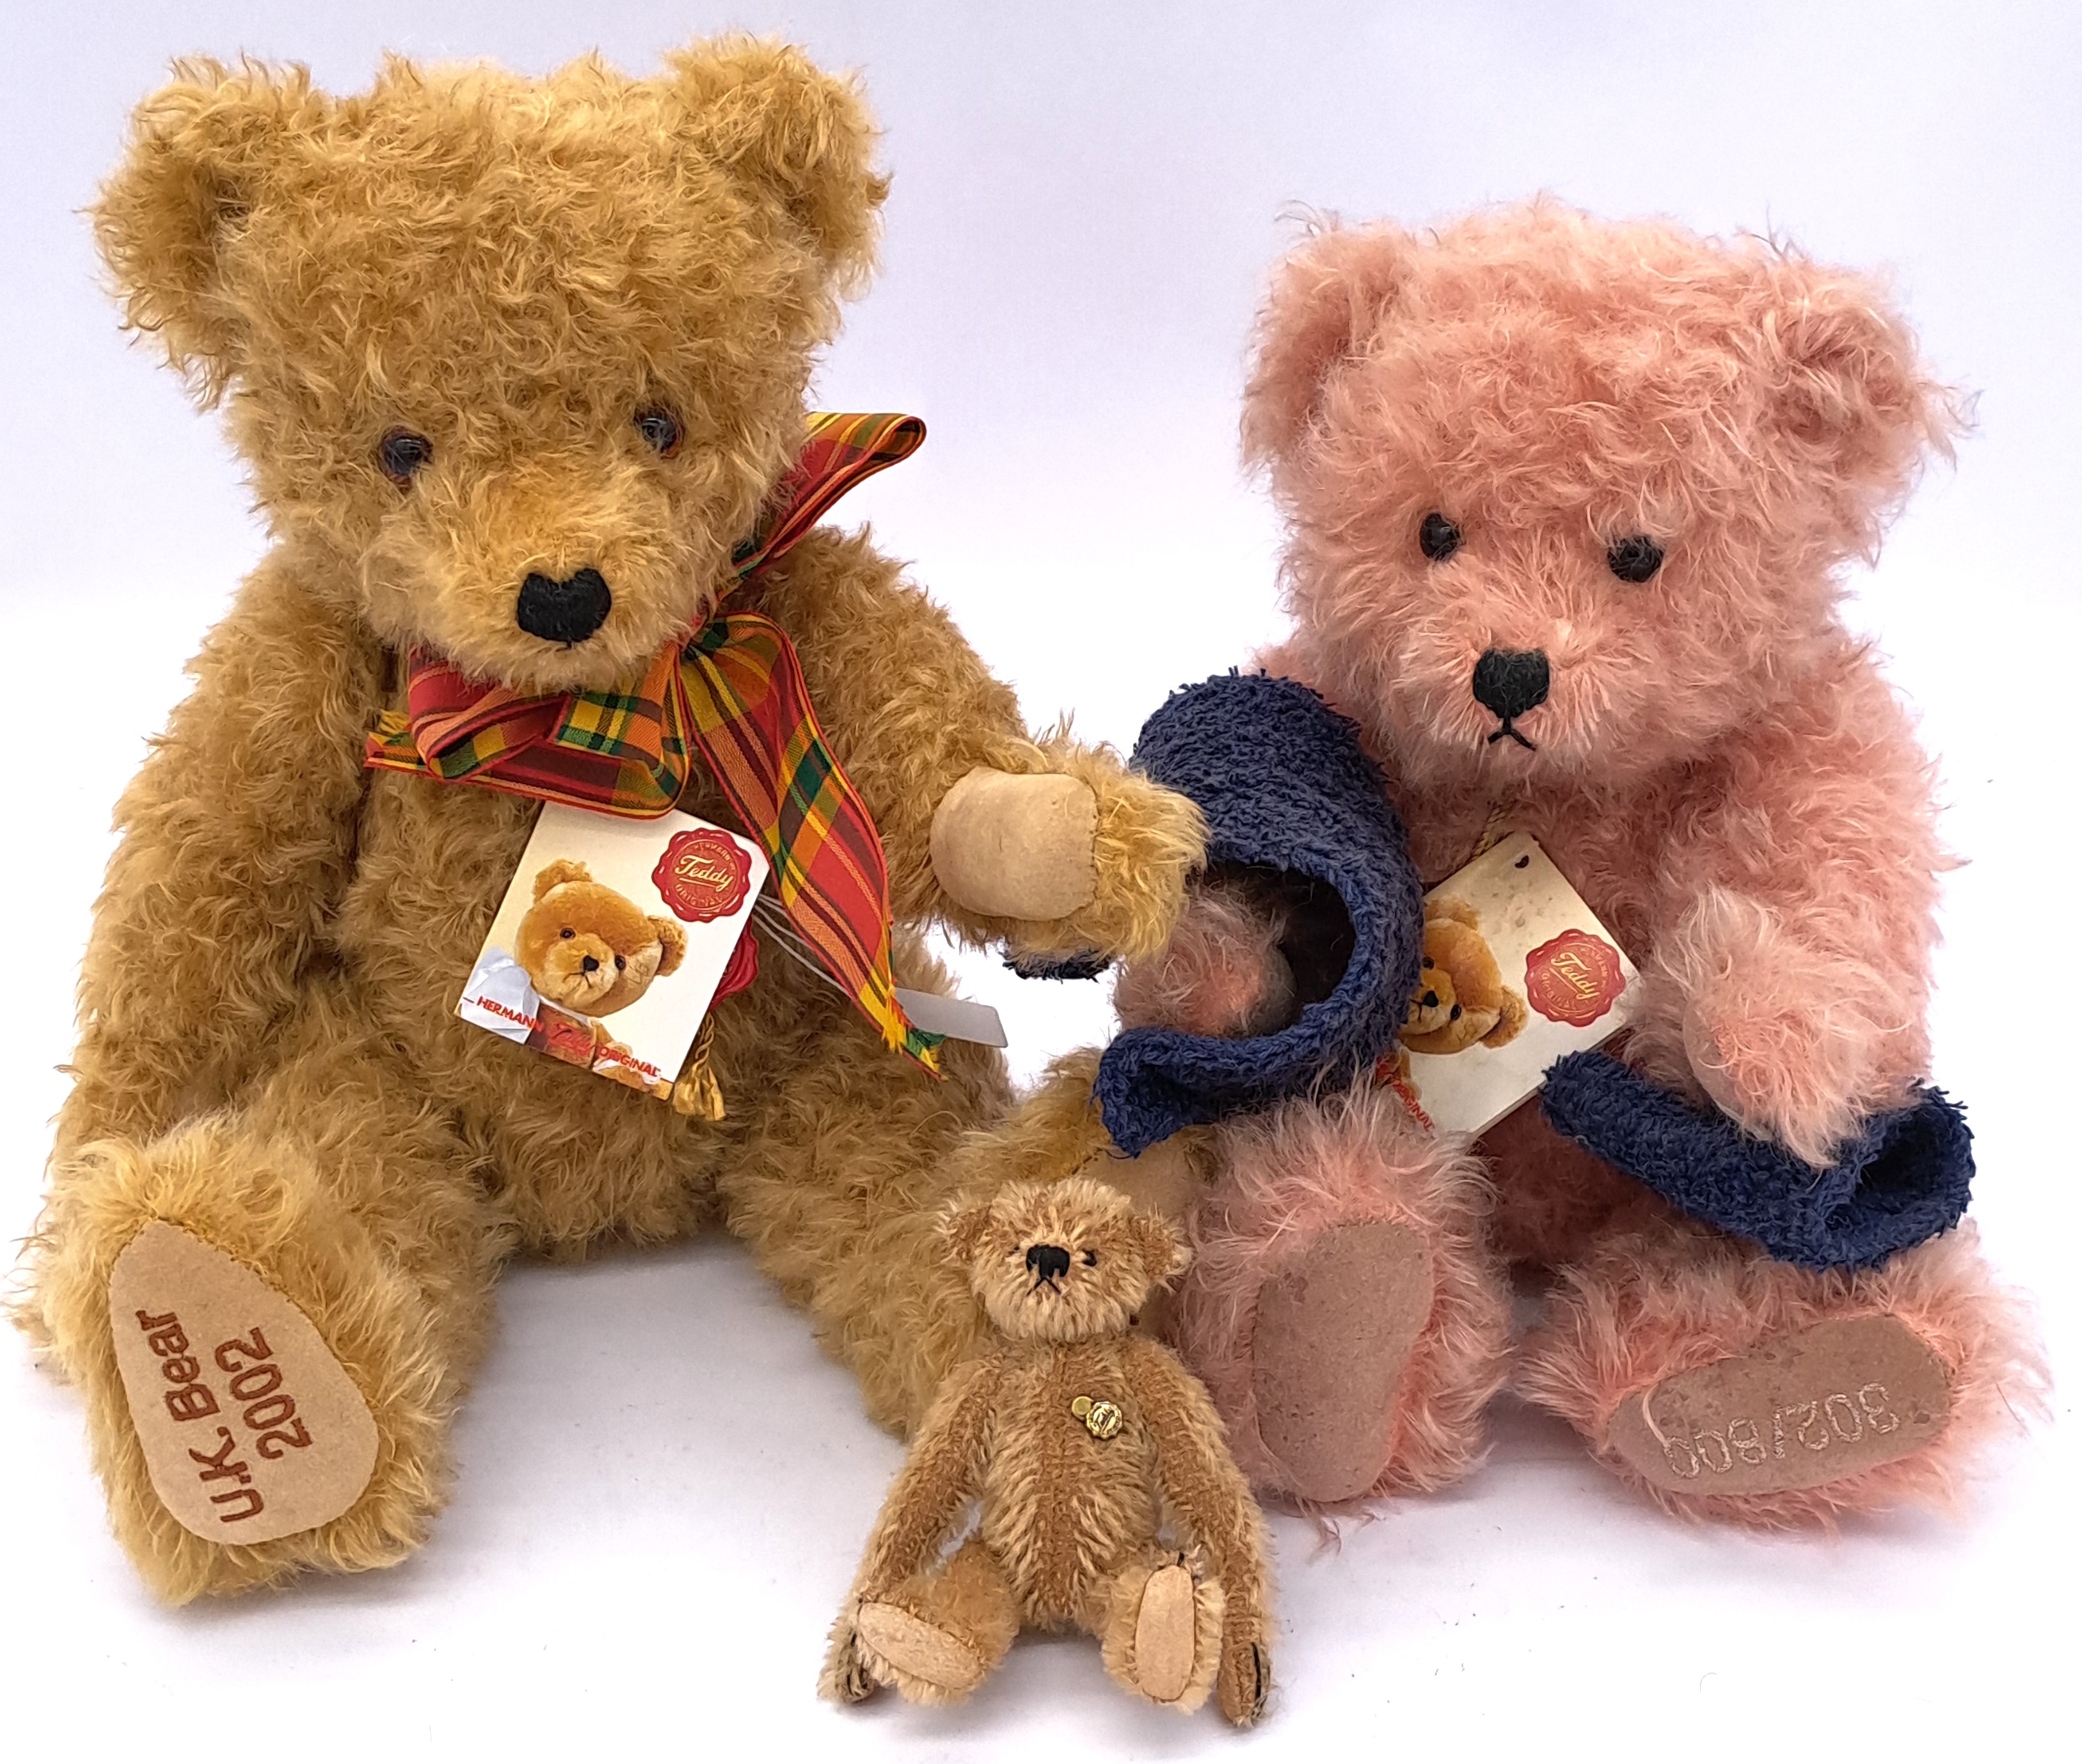 Teddy-Hermann trio of teddy bears